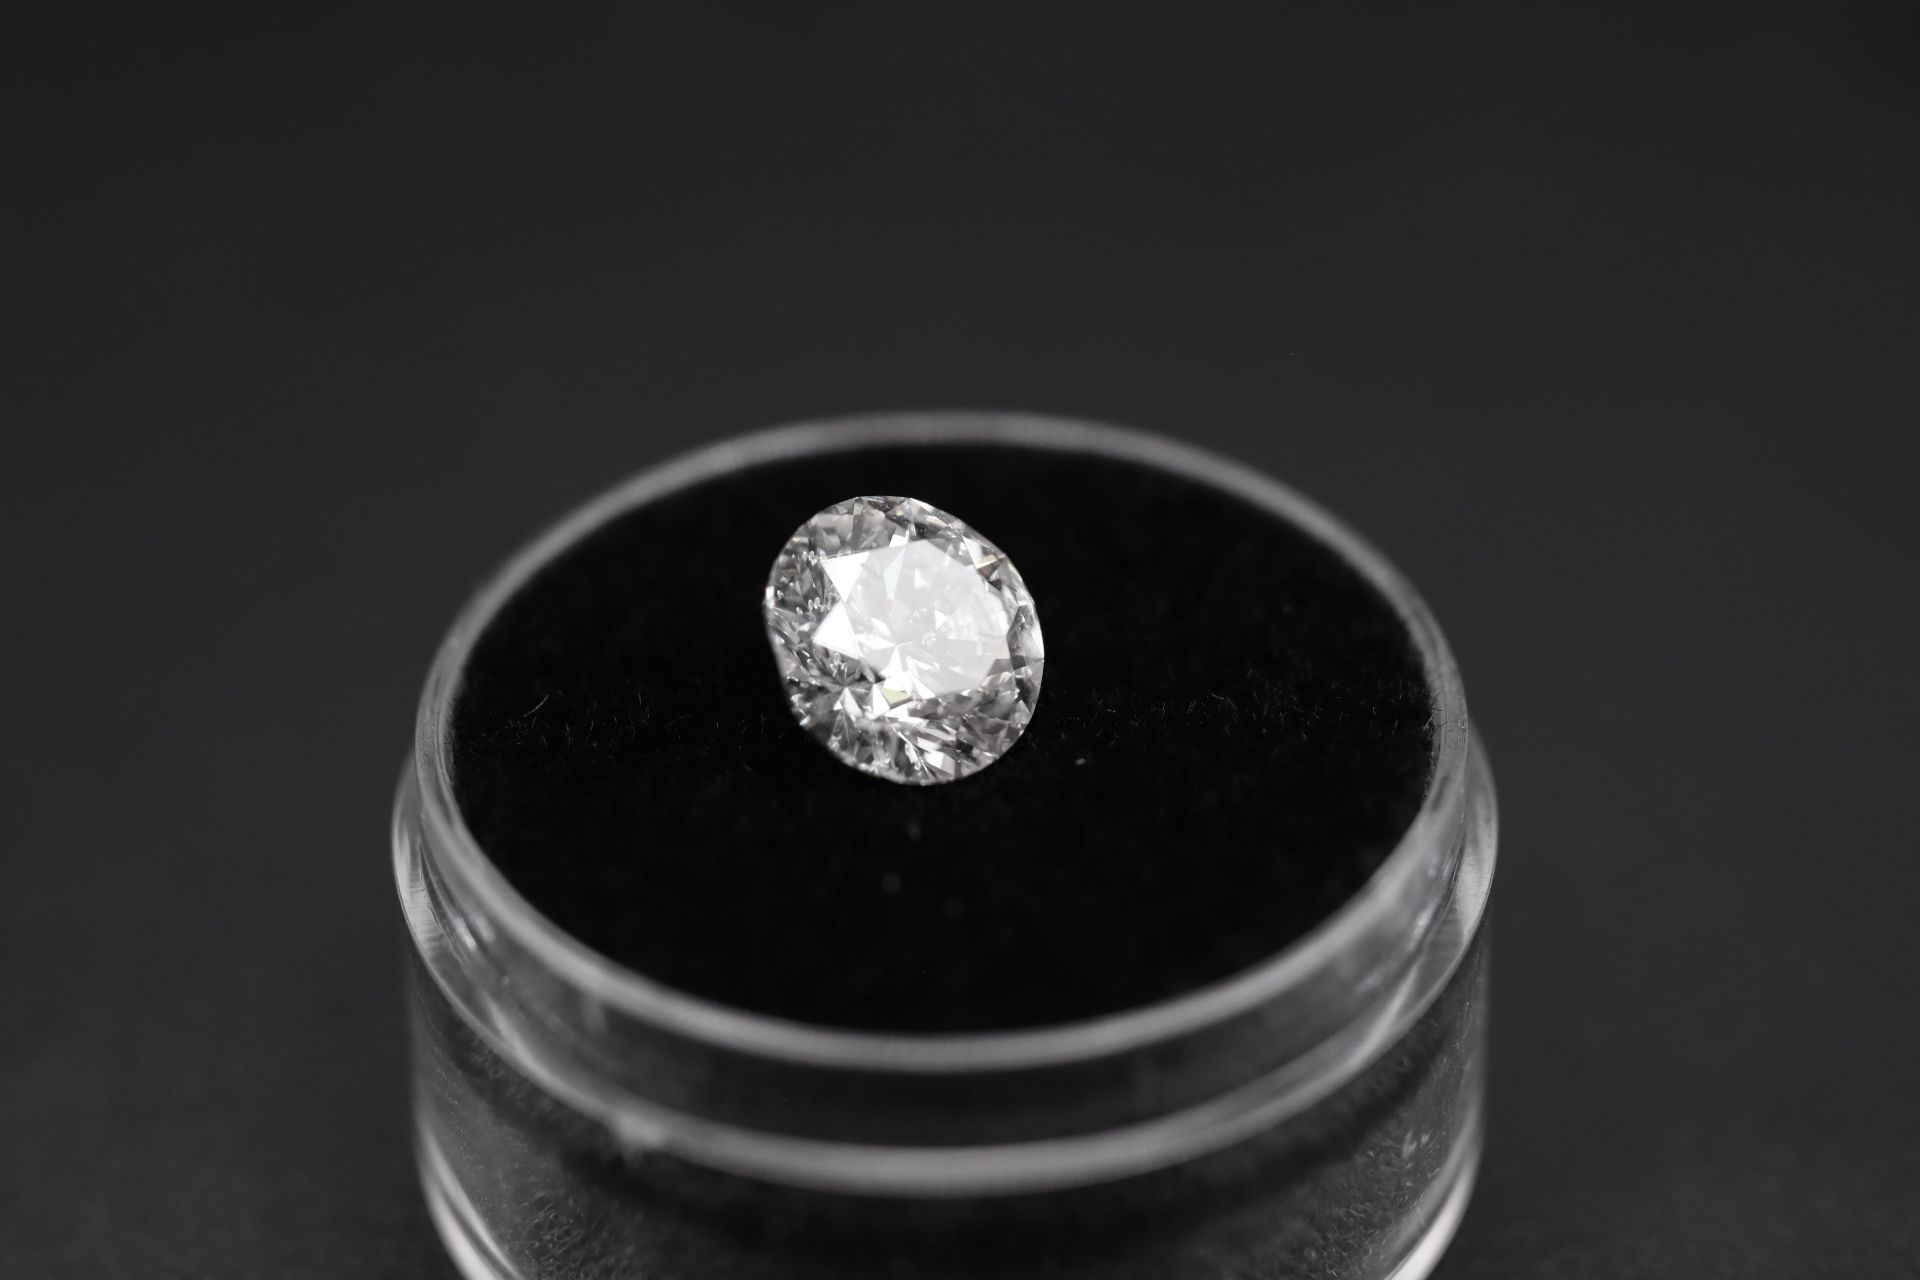 Round Brilliant Cut Natural Diamond 2.01 Carat Colour D Clarity VS1 - DGI Certificate - Image 6 of 24